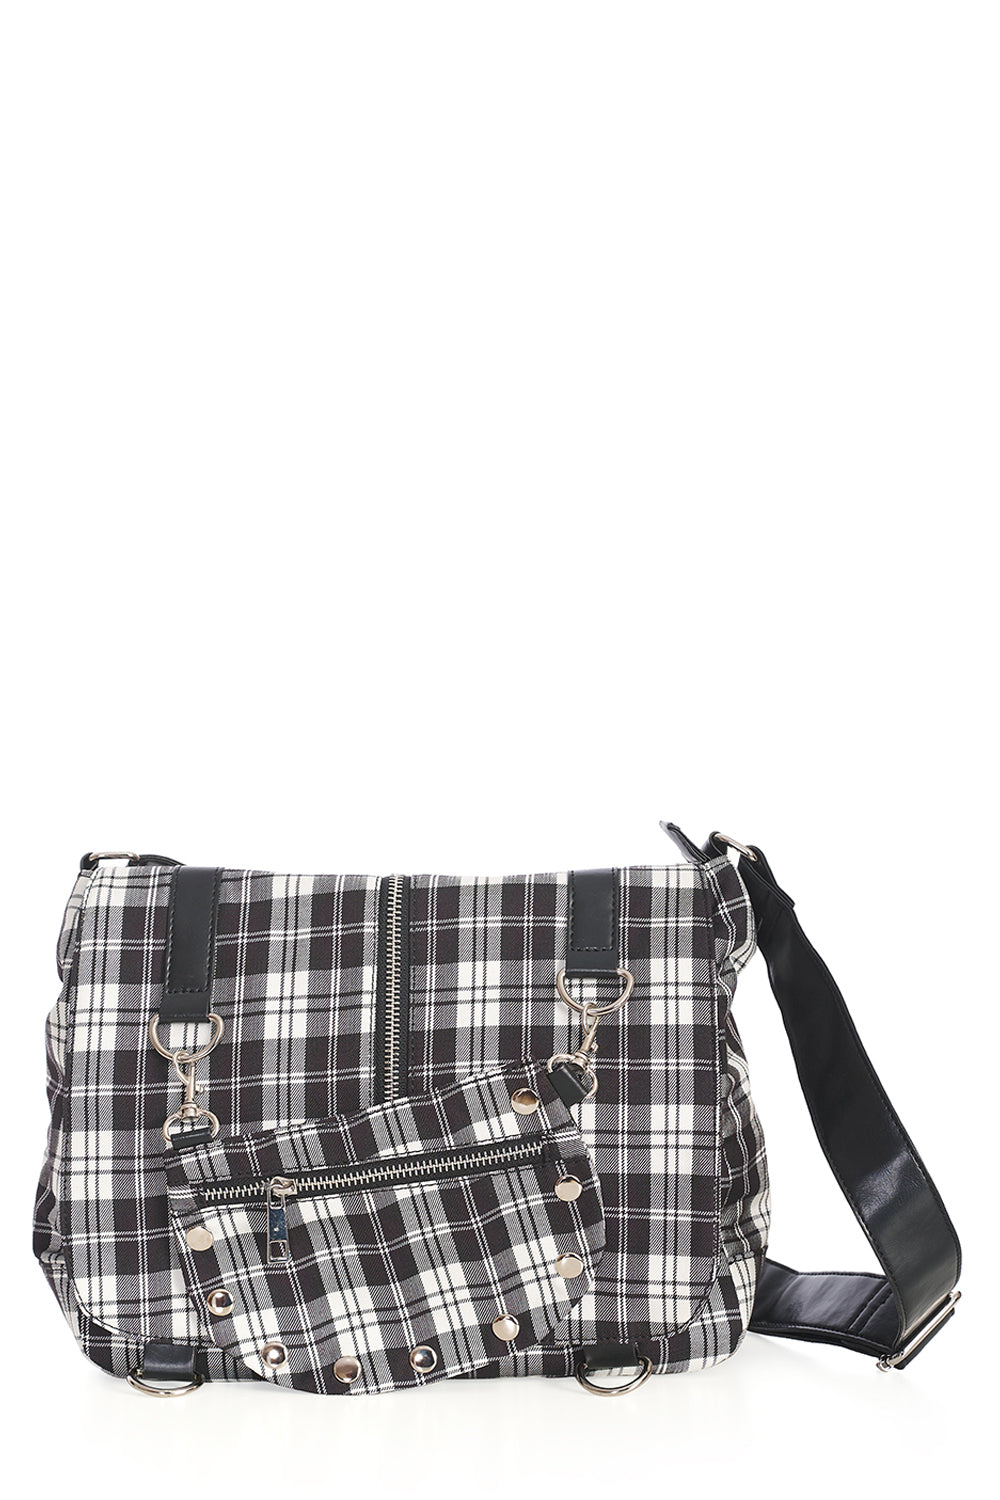 Punk Plaid Print Tartan Messenger Shoulder Bag Crossbody Handbag Women's Purse (Black/White)